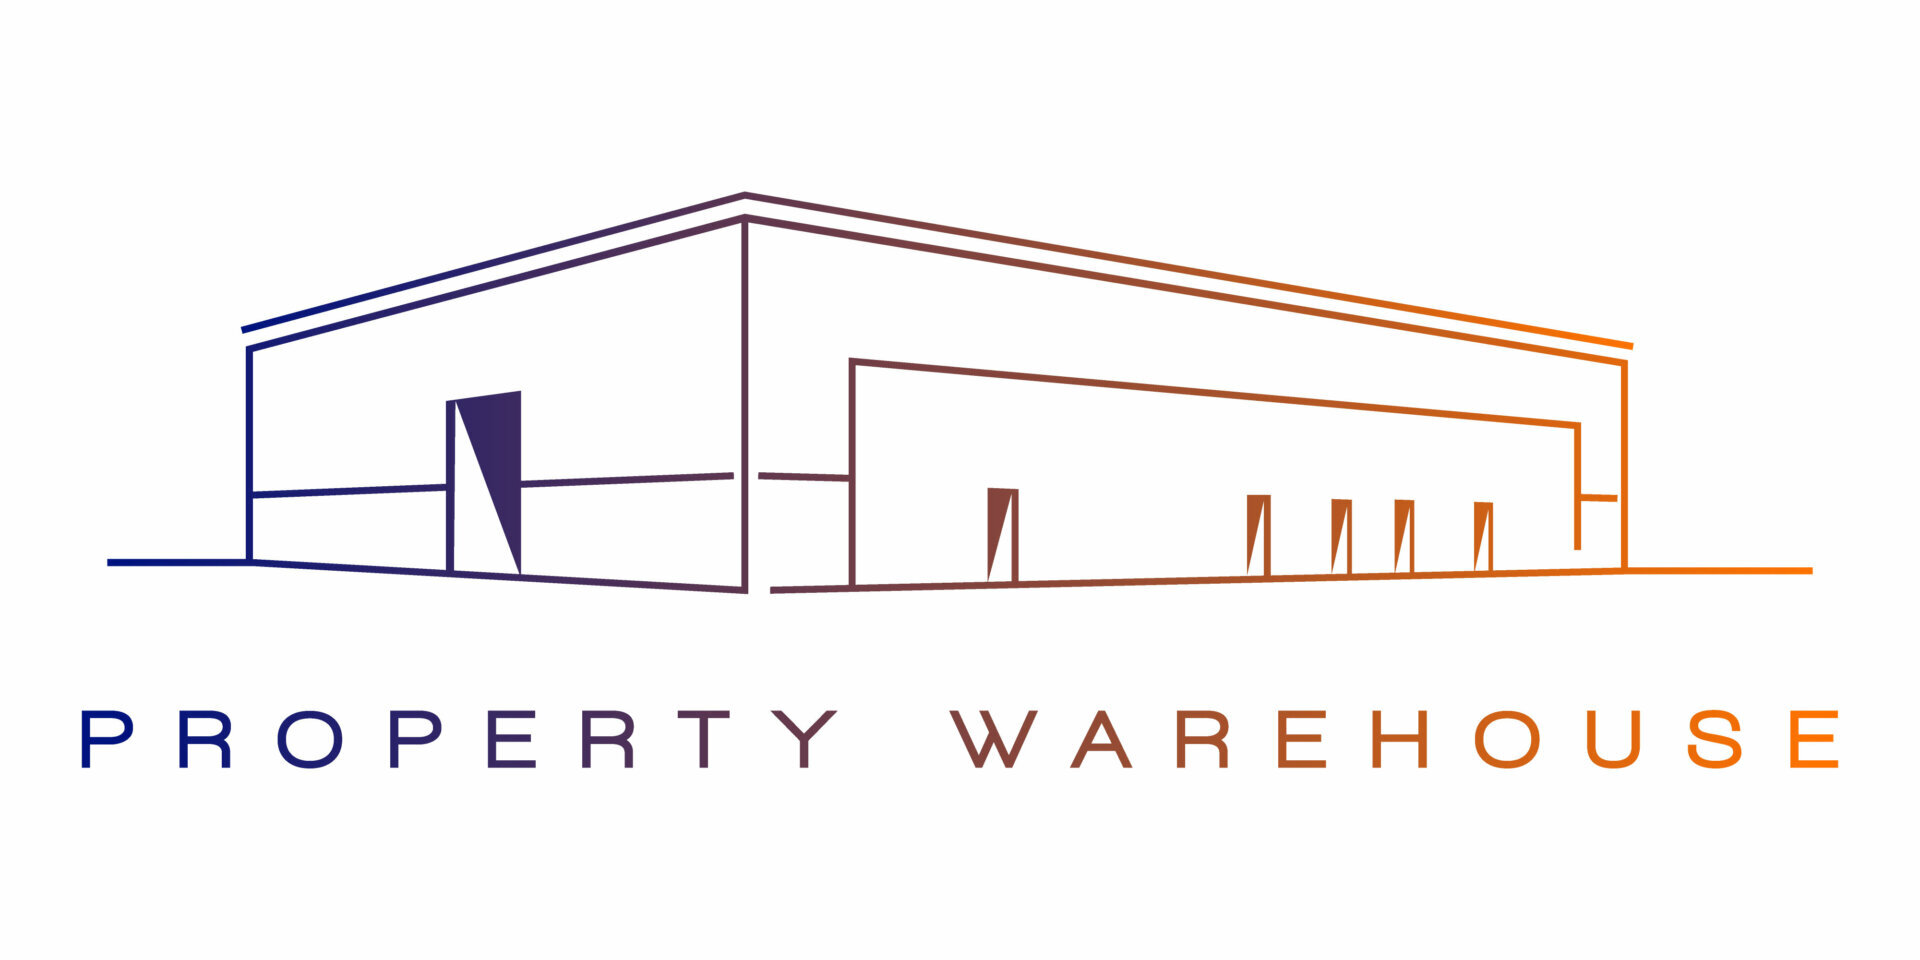 The Property Warehouse logo